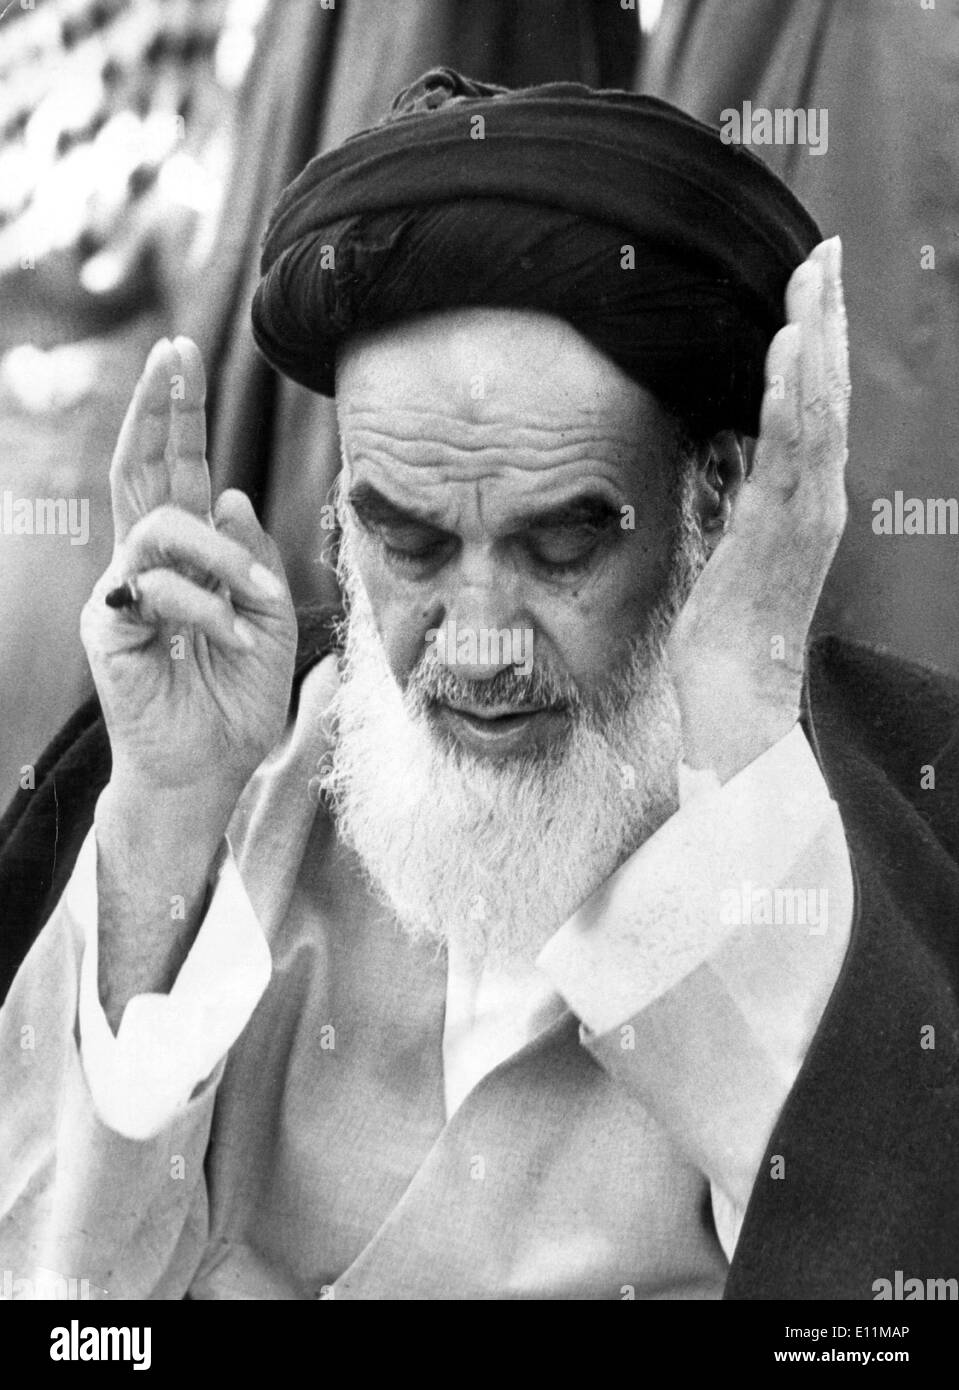 5092702 (900326) Ayatollah KHOMEINI (24.09.1902 - 03.06.1989, Ruhollah Mussawi HENDI) iranischer Religionsf hrer und Politiker, Stock Photo